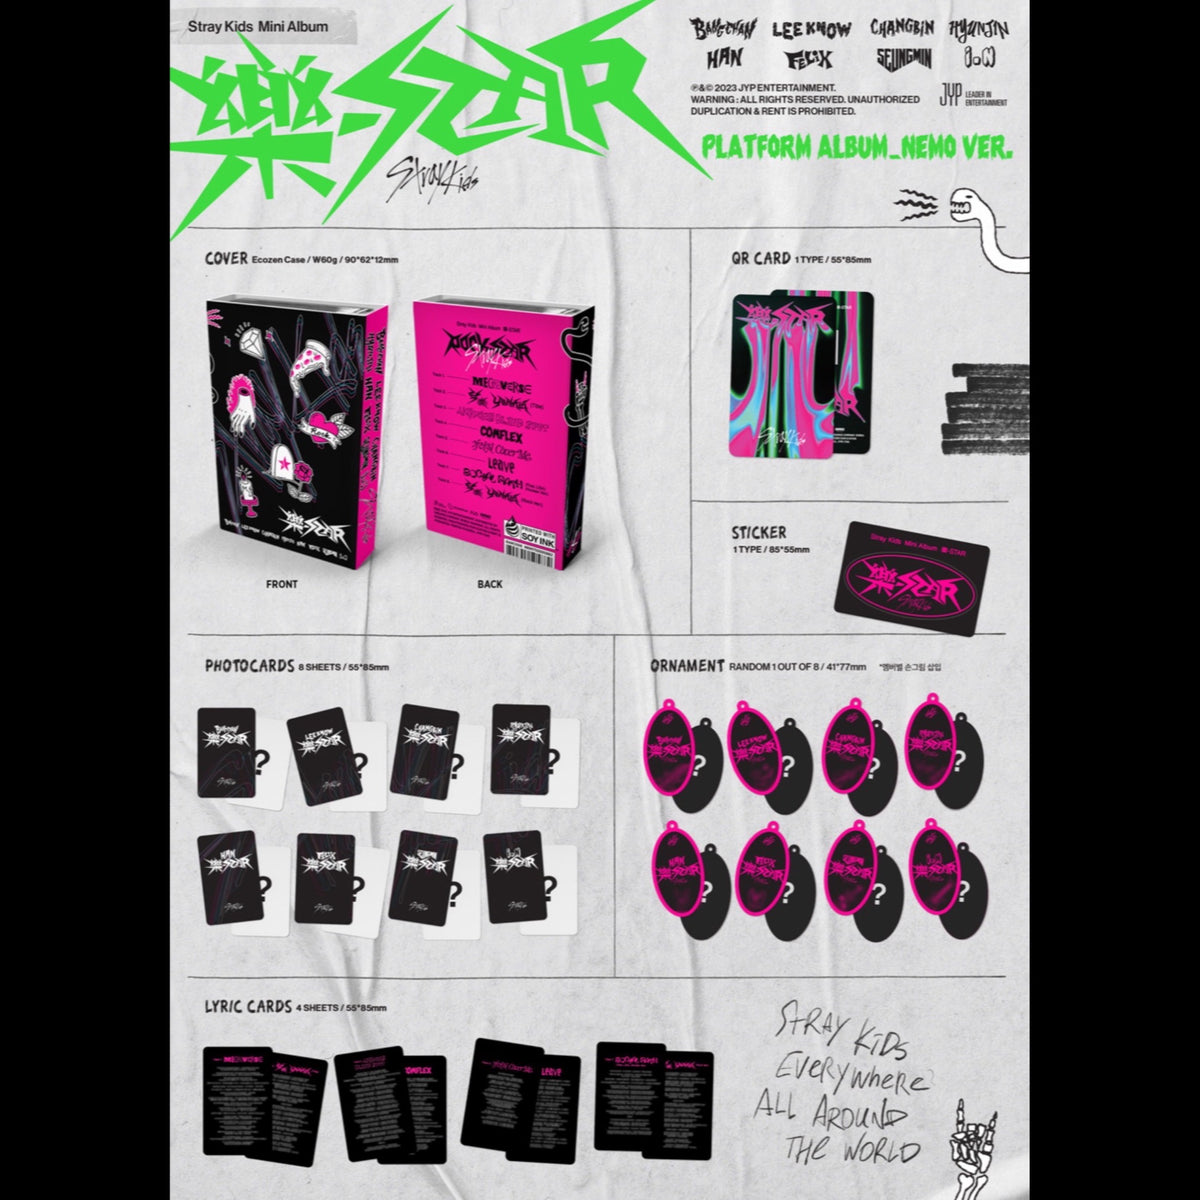 Stray Kids - ROCK-STAR (樂-STAR) PLATFORM ALBUM NEMO VER. — Nolae